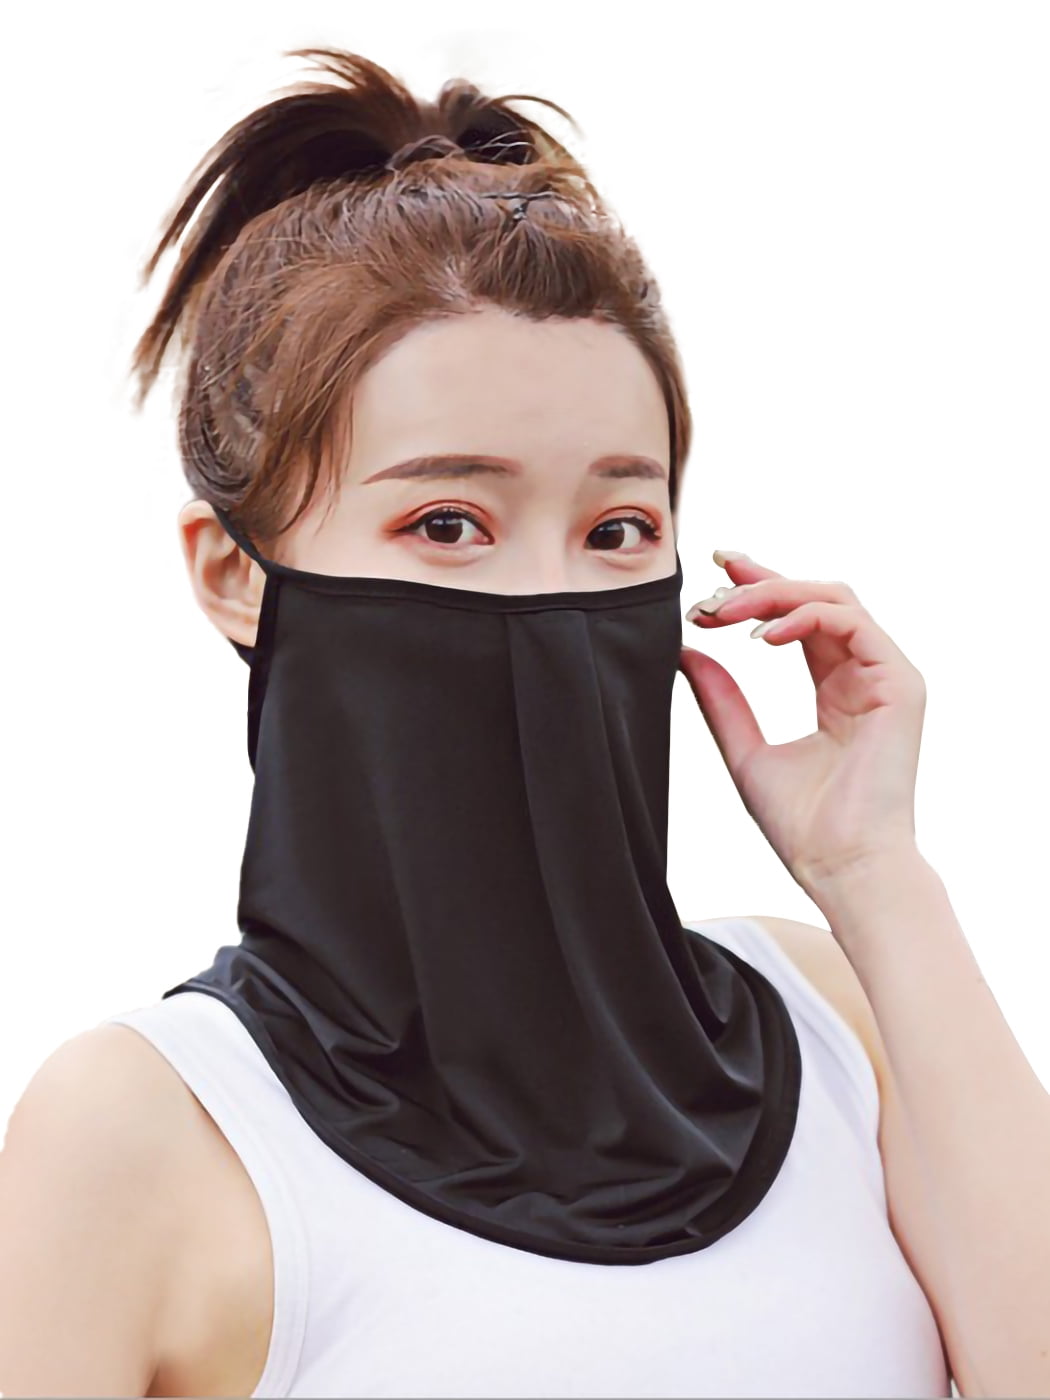 Two-Pack Neck Gaiter UV Protection Face Mask Scarf Breathable Bandana Balaclava 